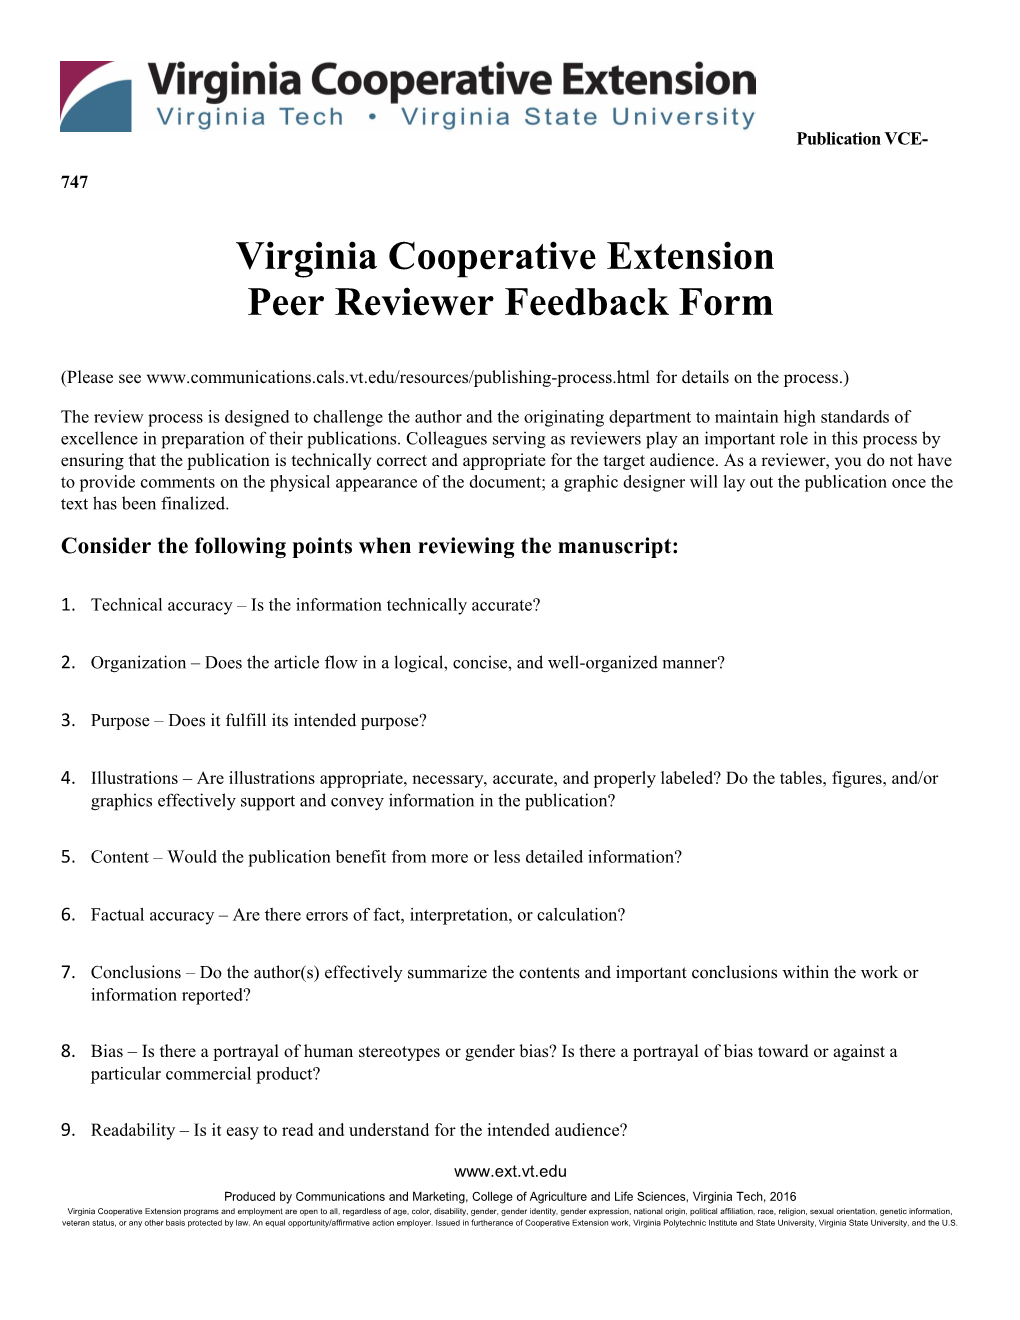 Virginia Cooperative Extension Peer Reviewer Feedback Form